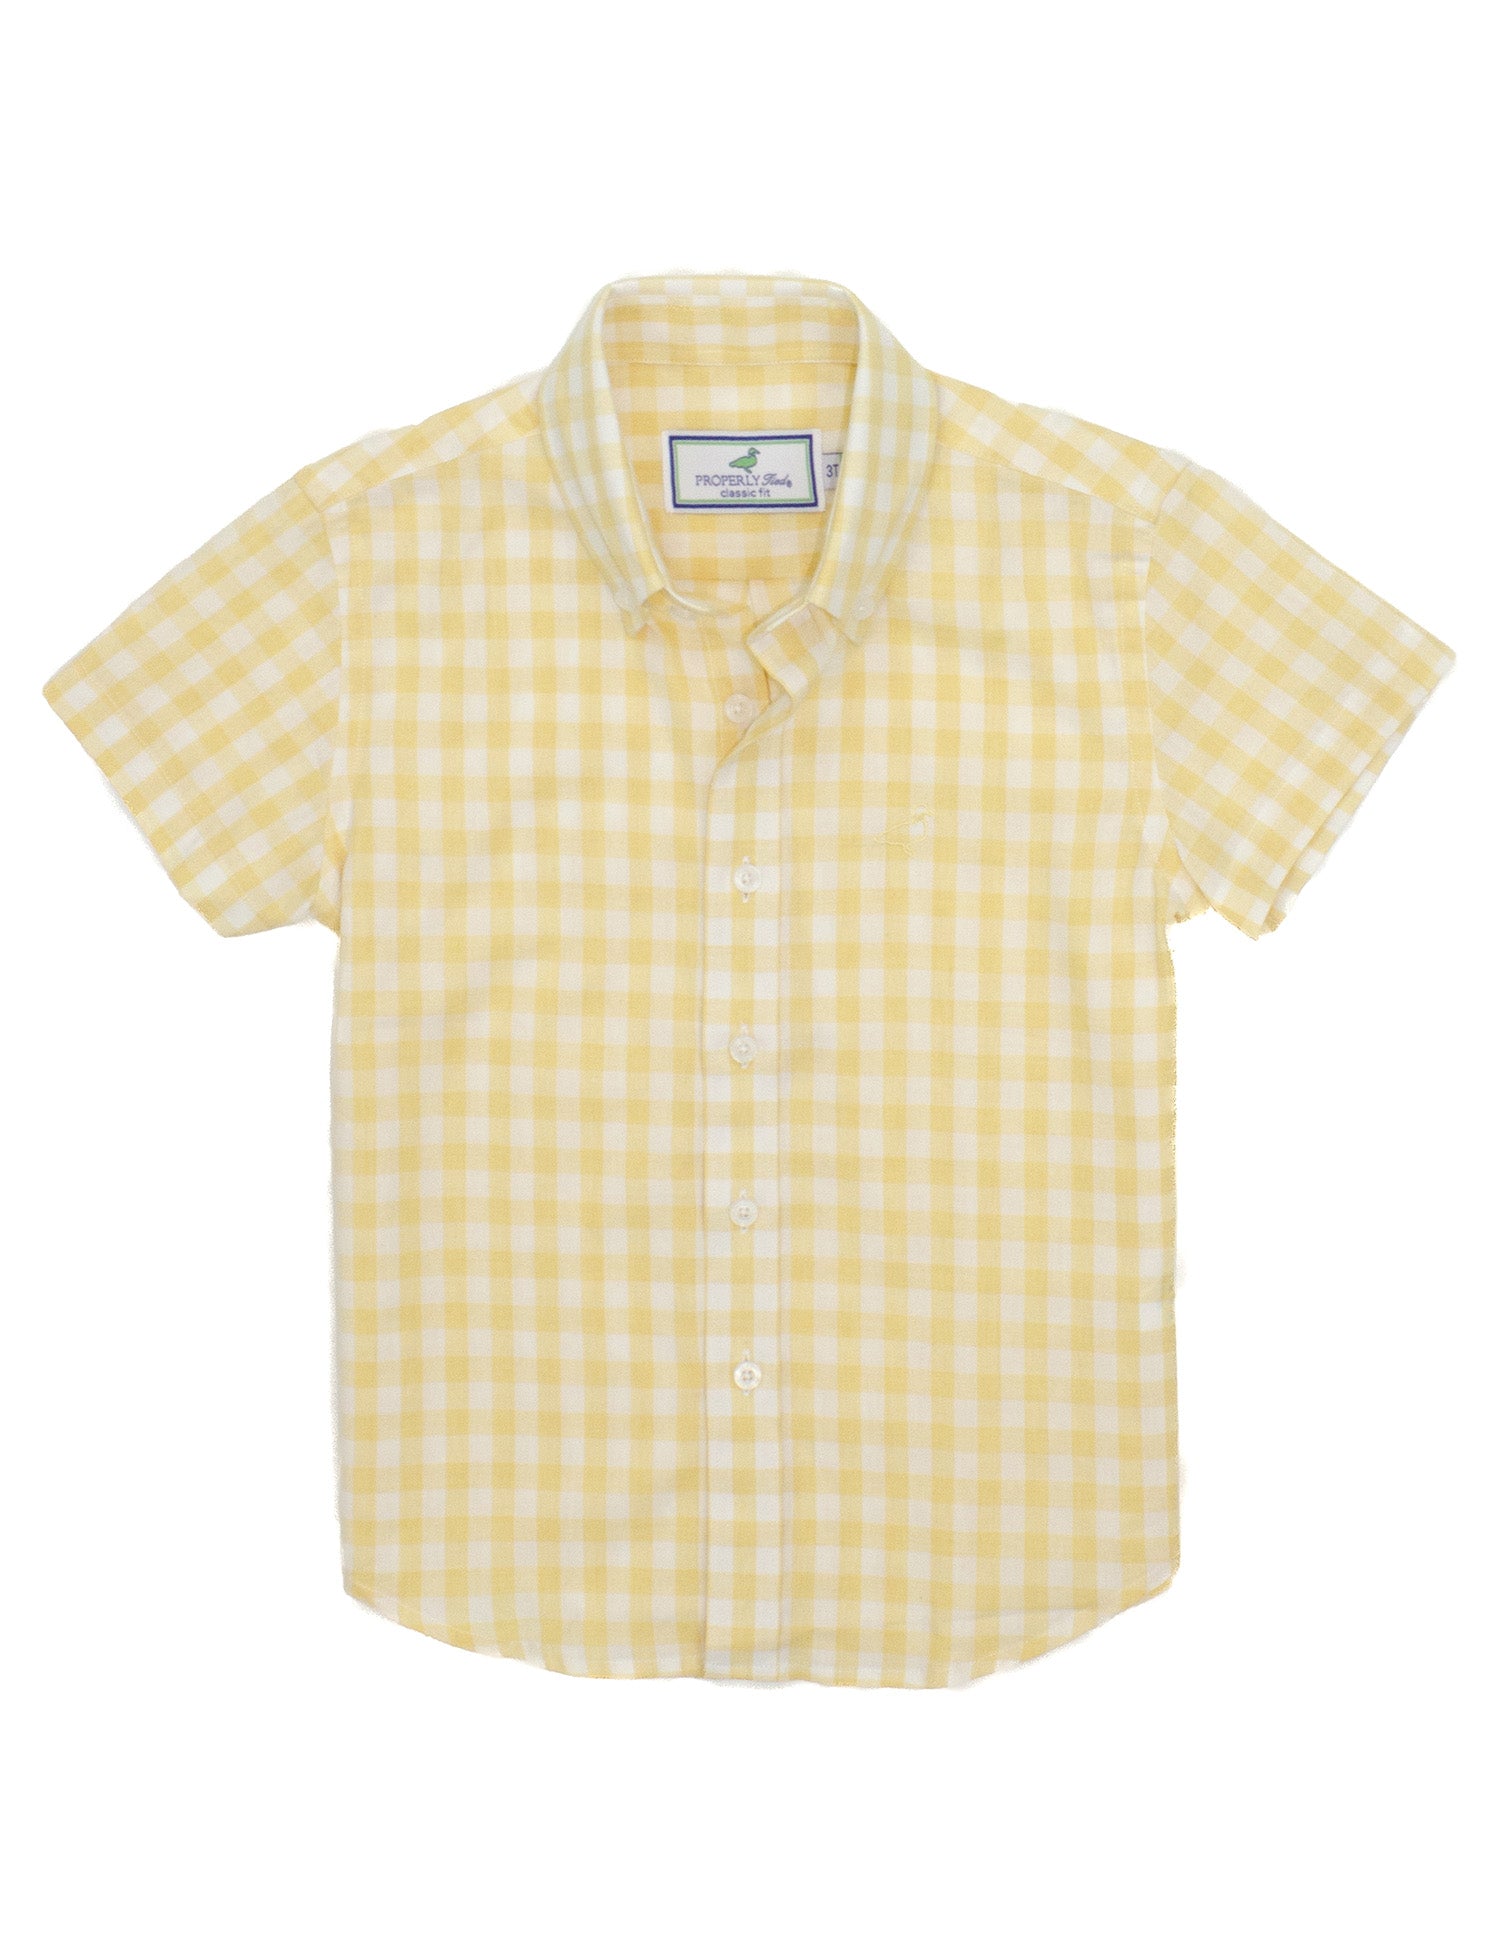 Boys Harbor Shirt SS Light Yellow